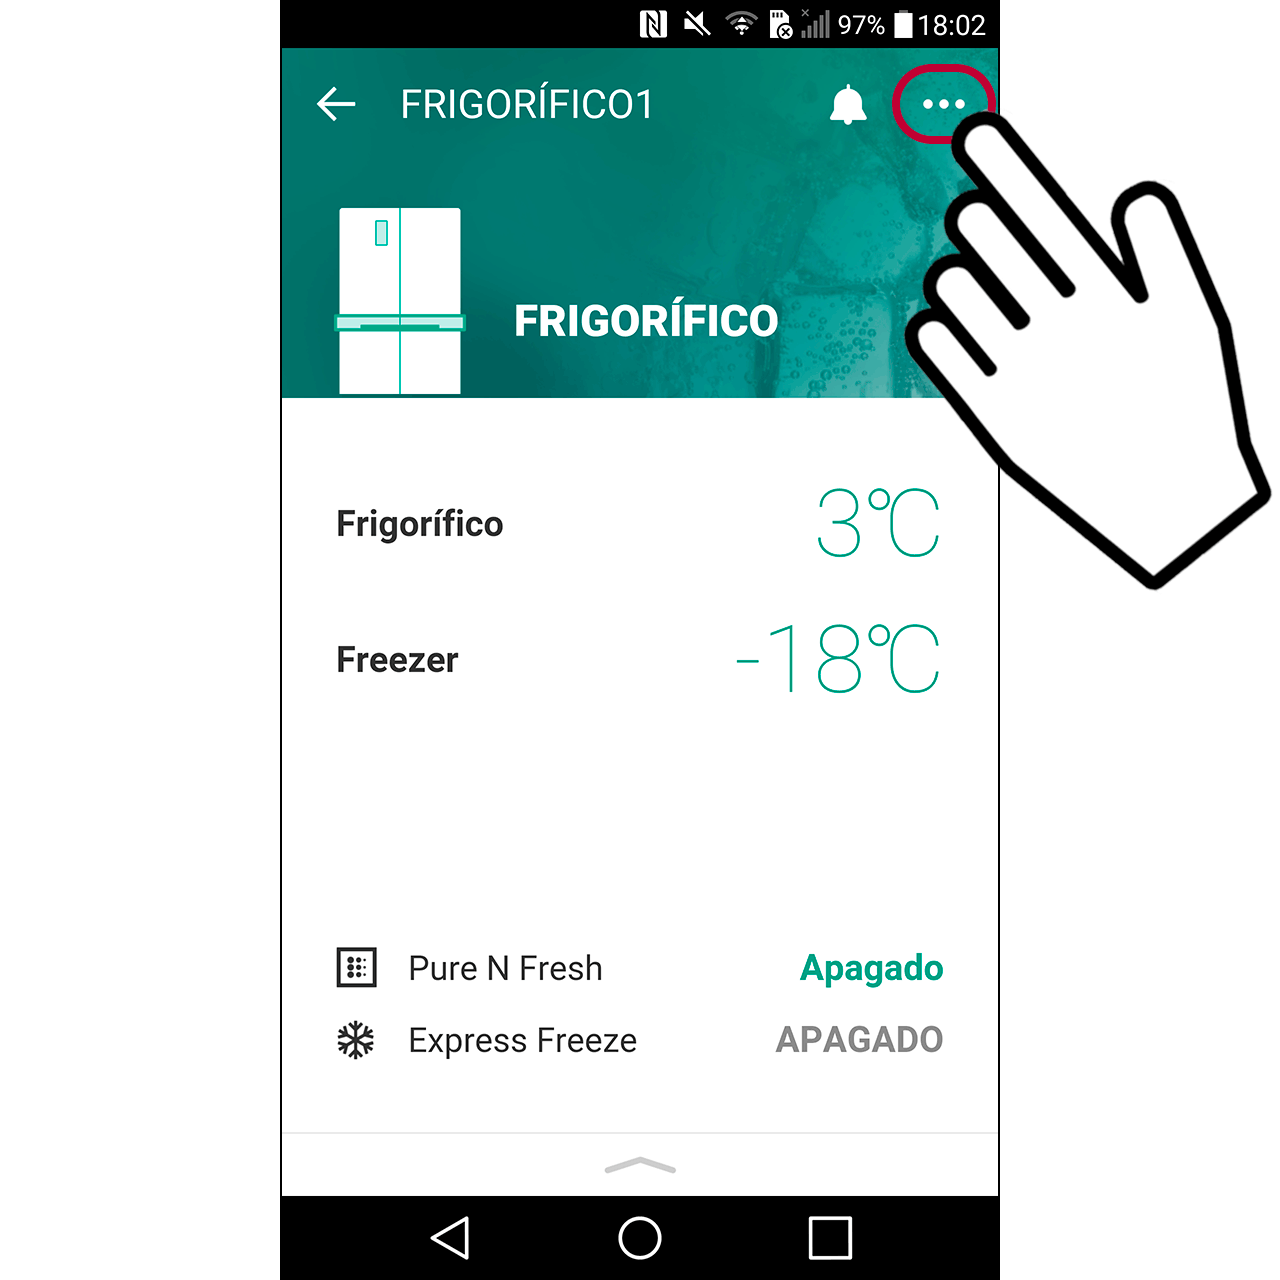 lg-frigorifico-app-smart-thinq-ajustes